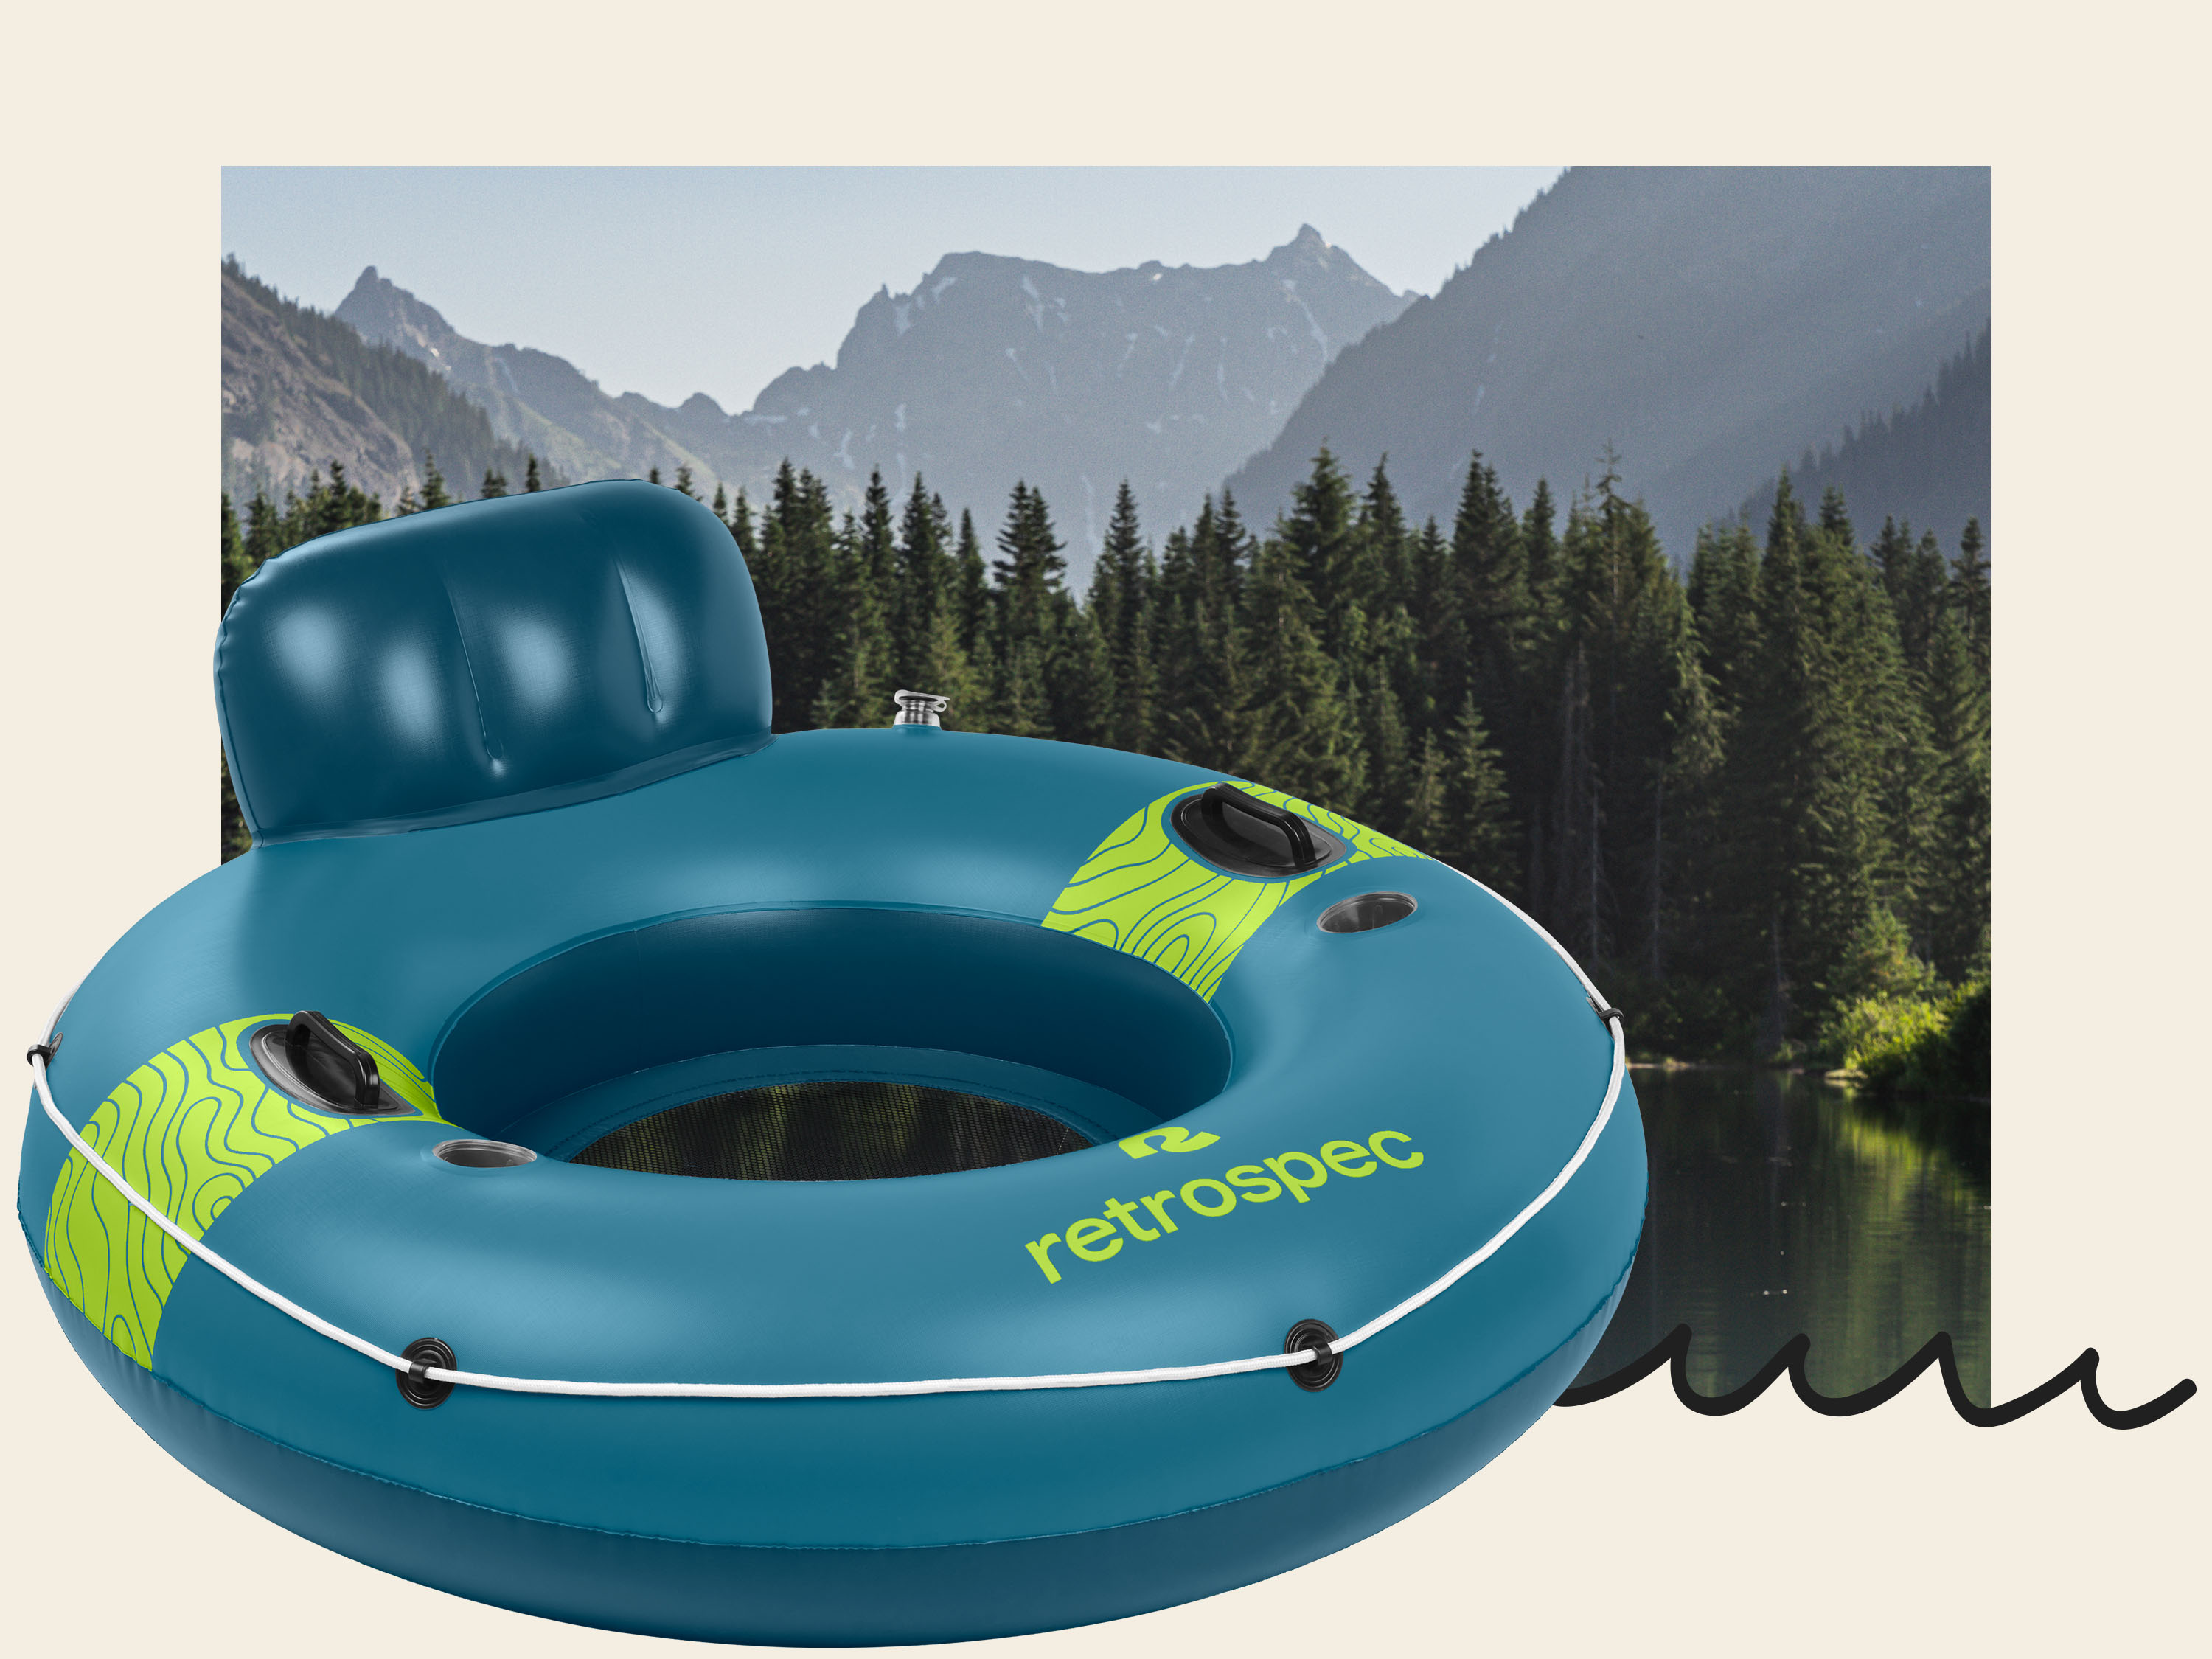 Weekender Float 48” Inflatable River Tube